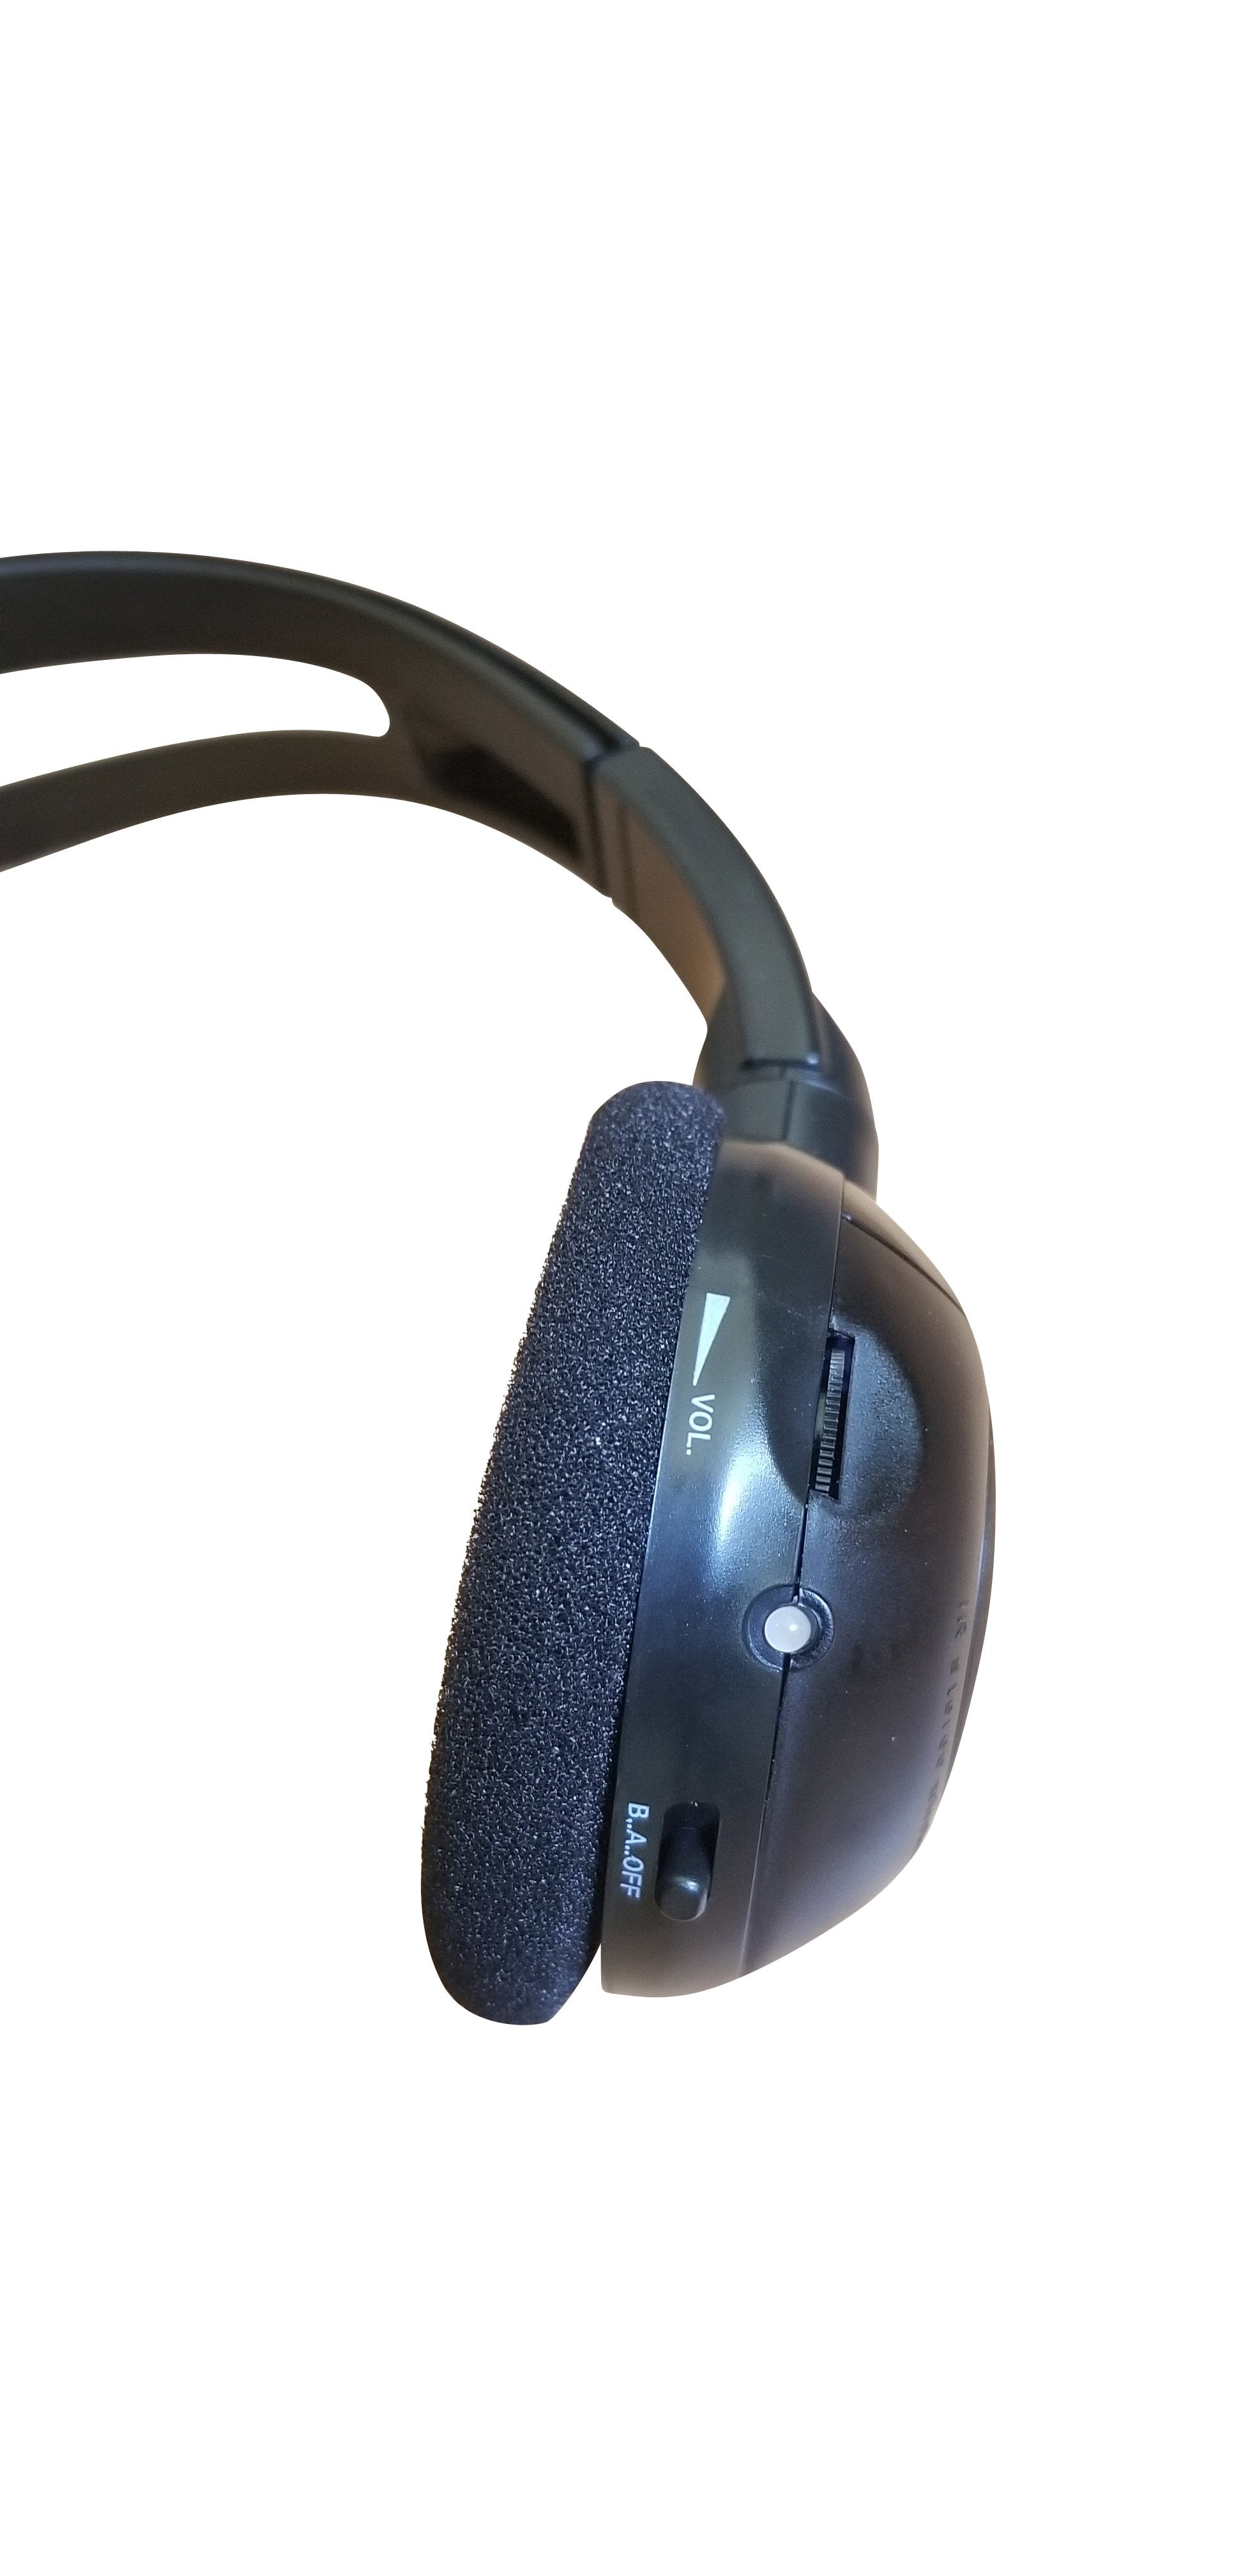 2015 GMC Sierra Wireless DVD Headphone